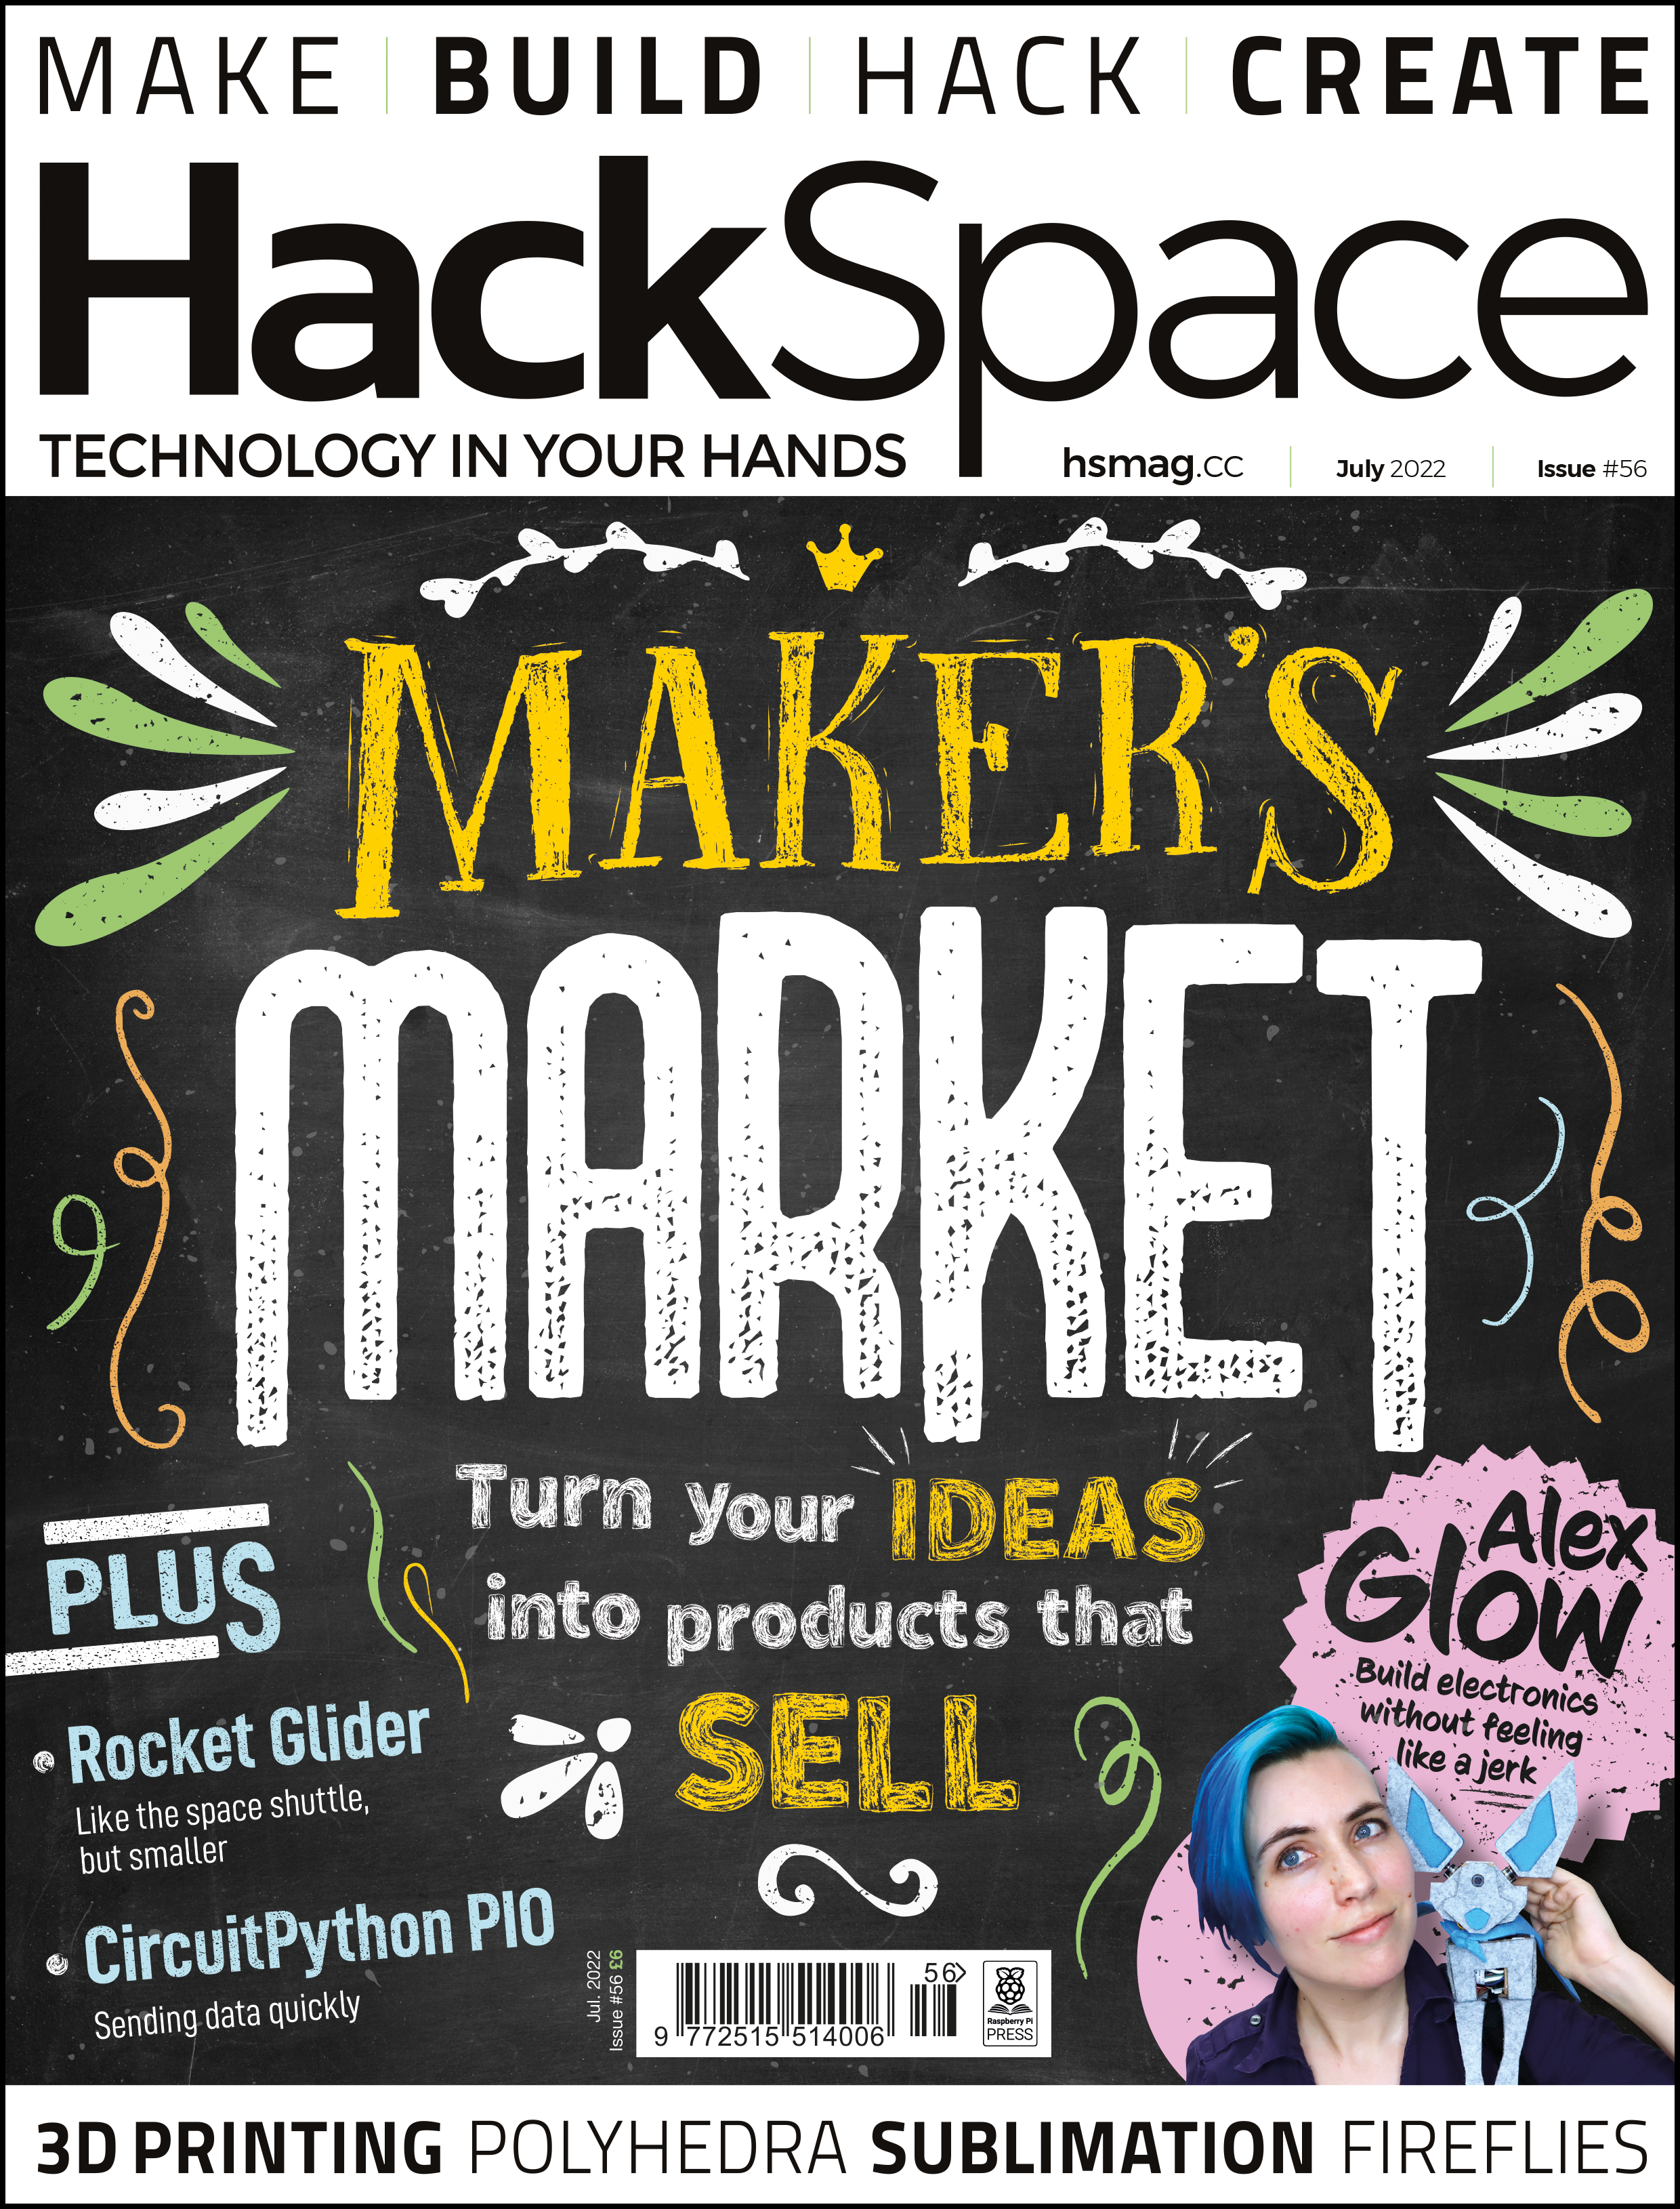 HackSpace magazine issue 56 cover